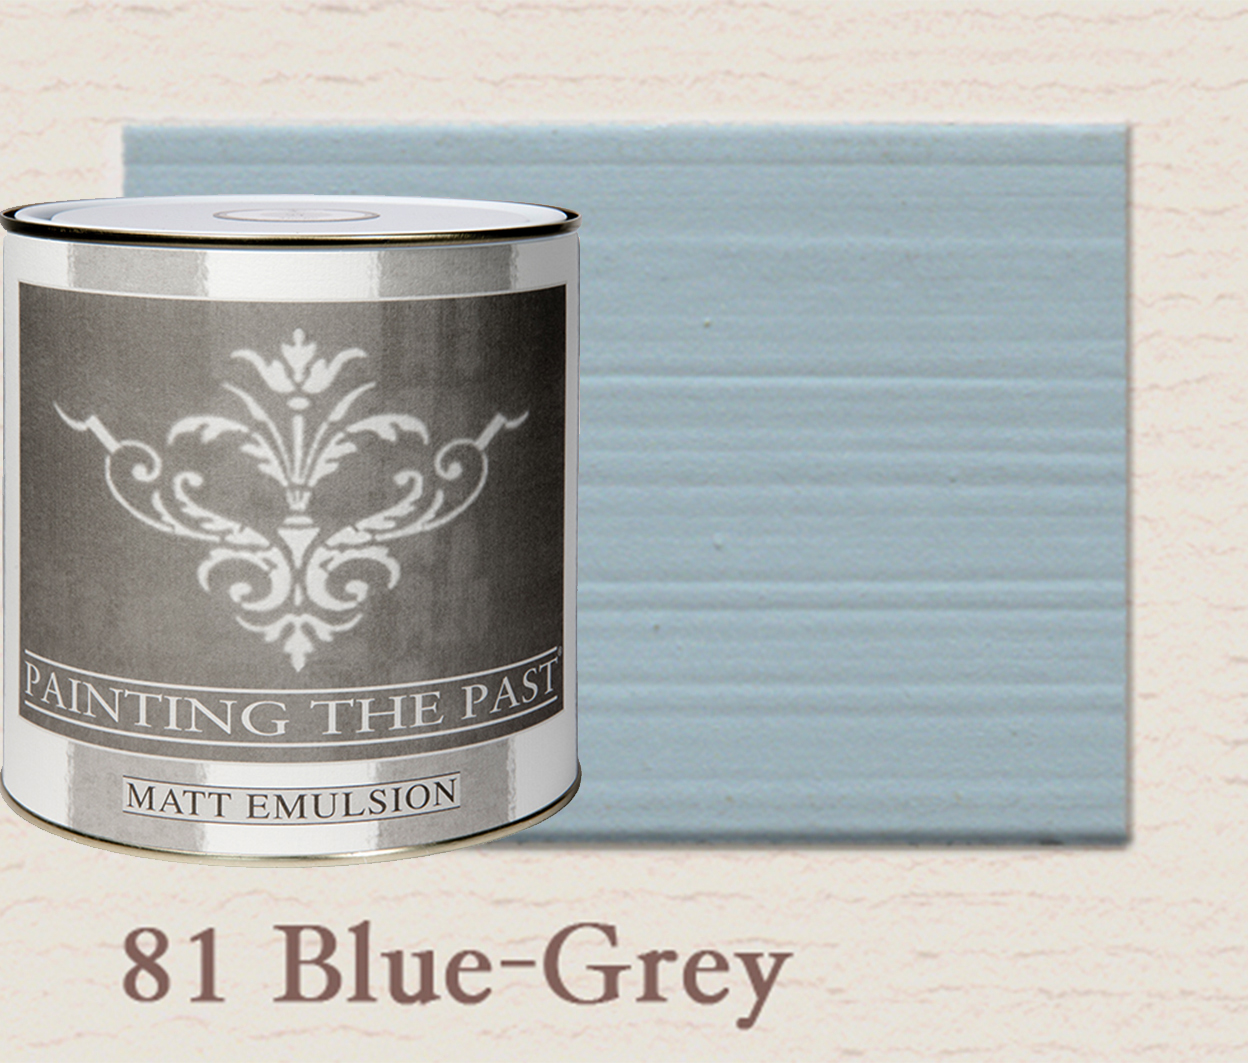 Painting The Past Matt Emulsion Blue Grey